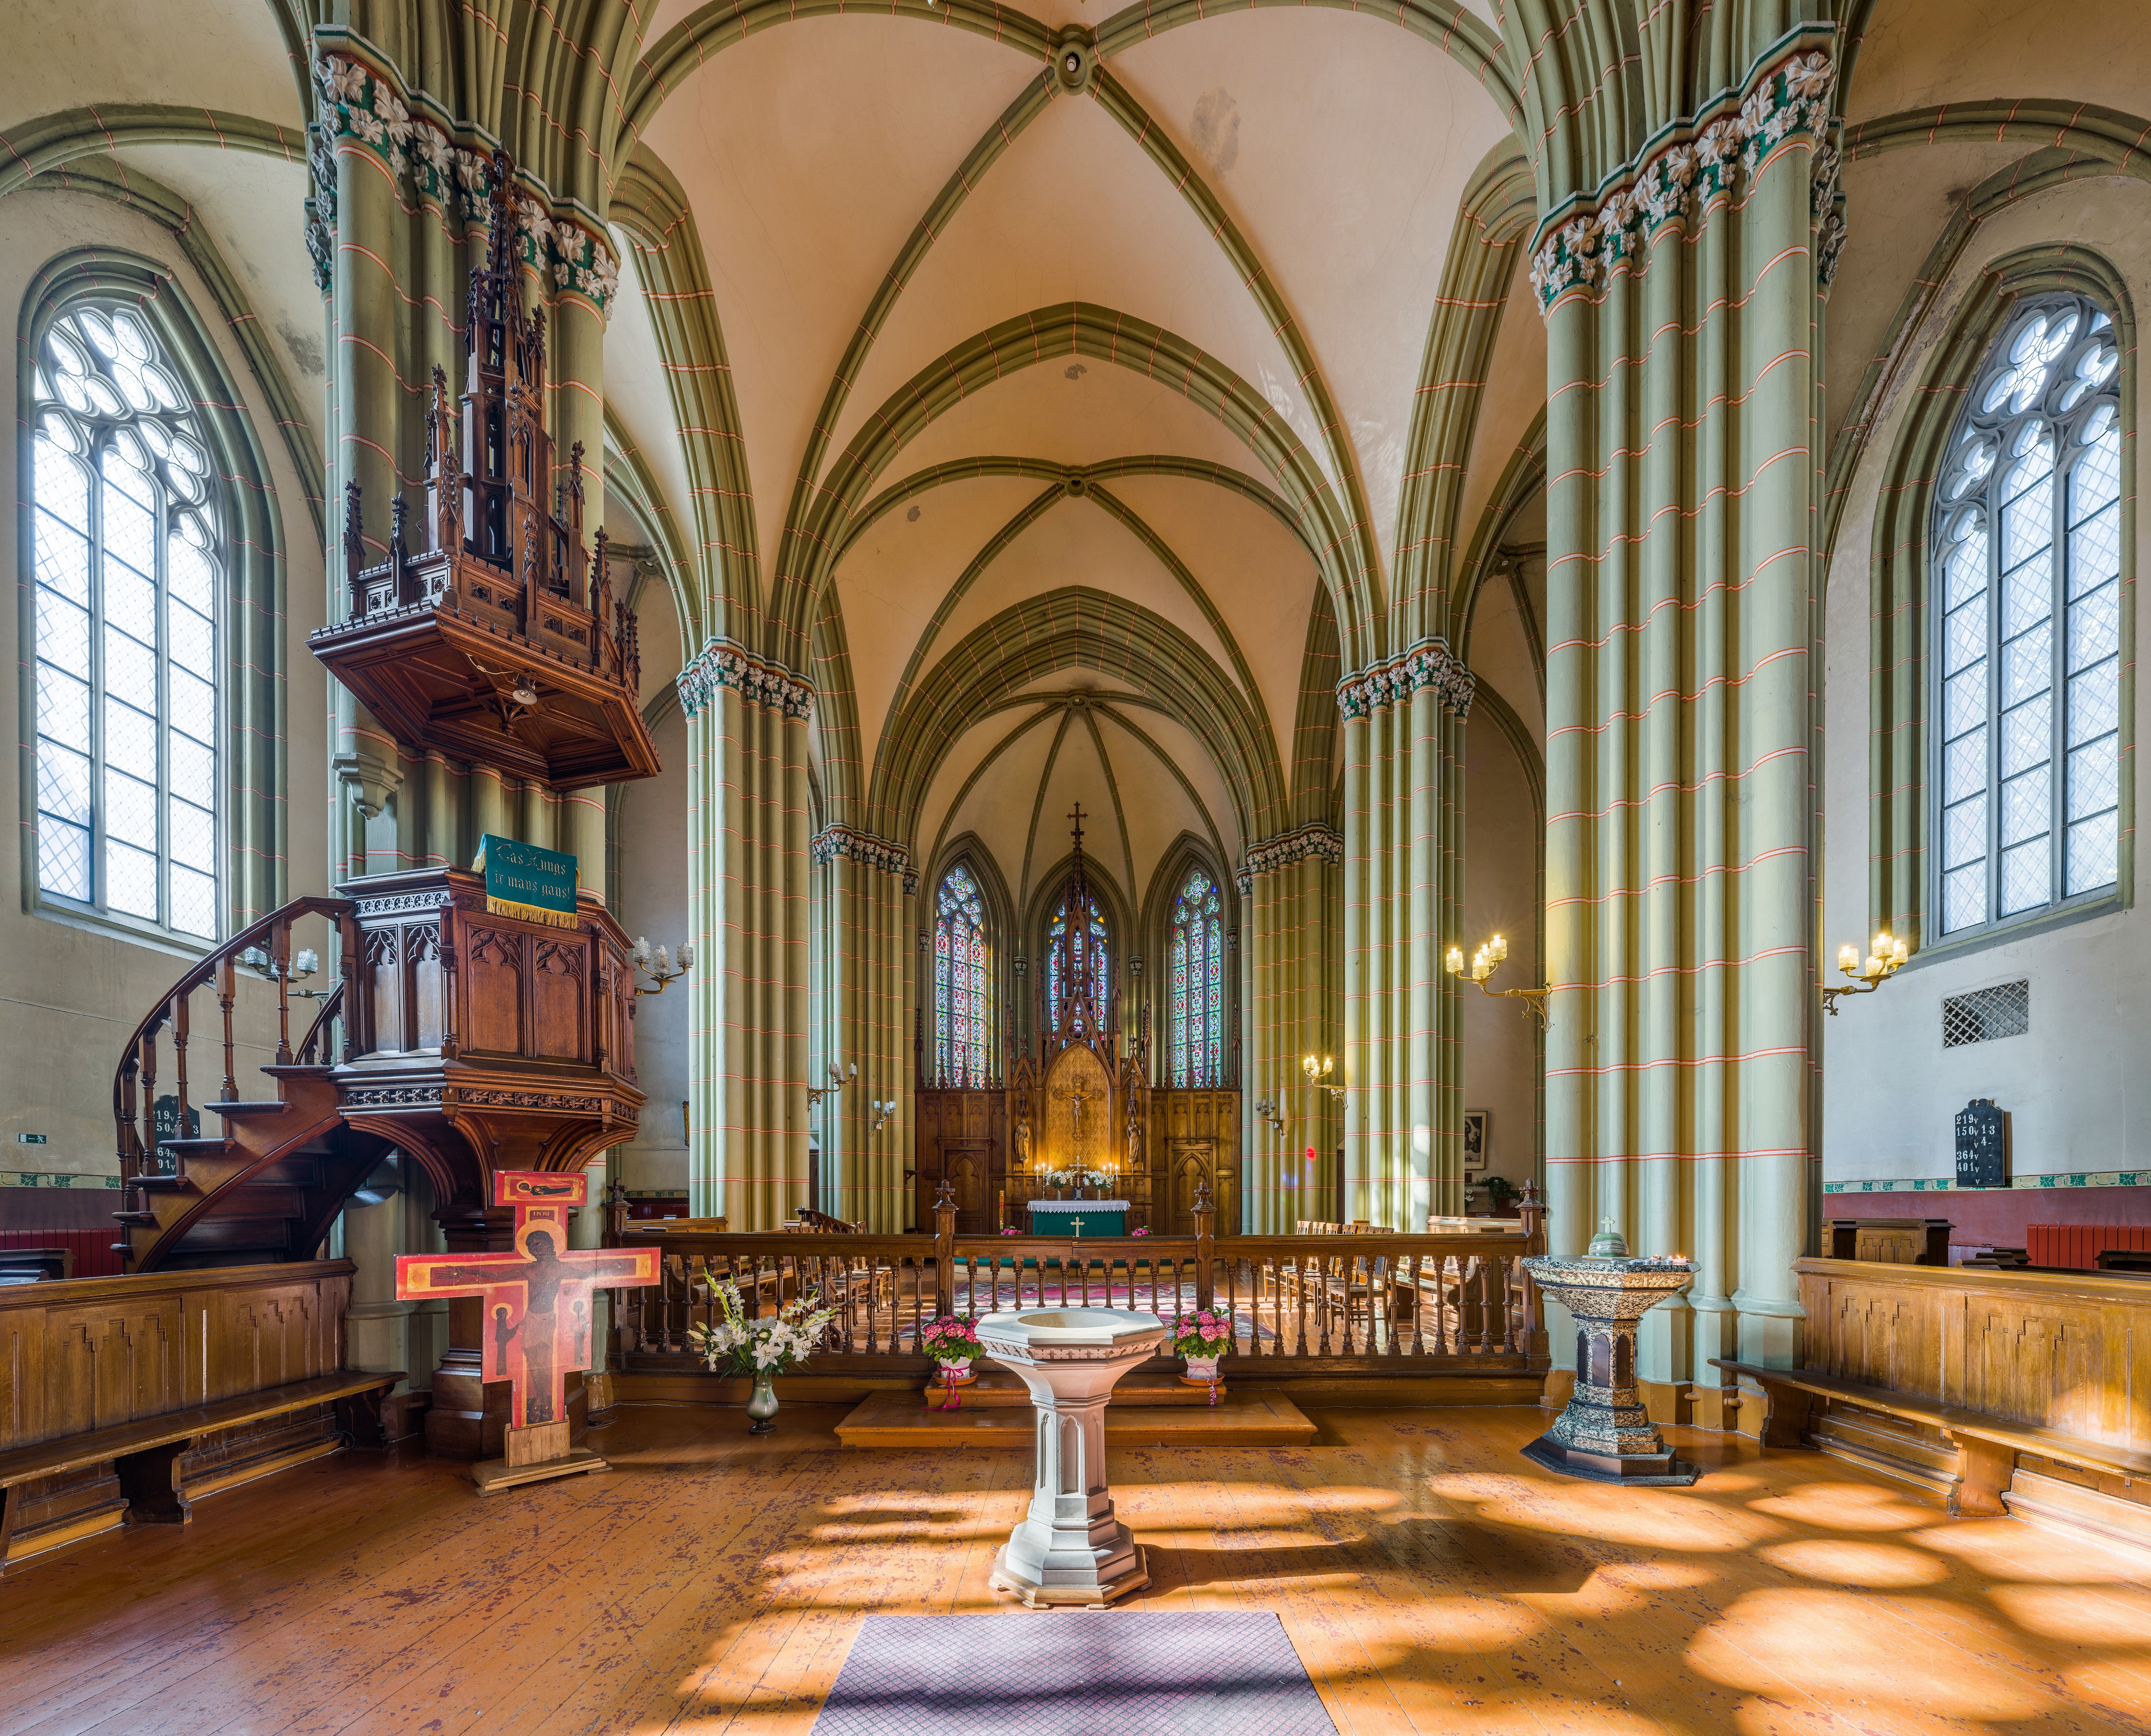 St. Gertrude Old Church Interior 2, Riga, Latvia - Diliff